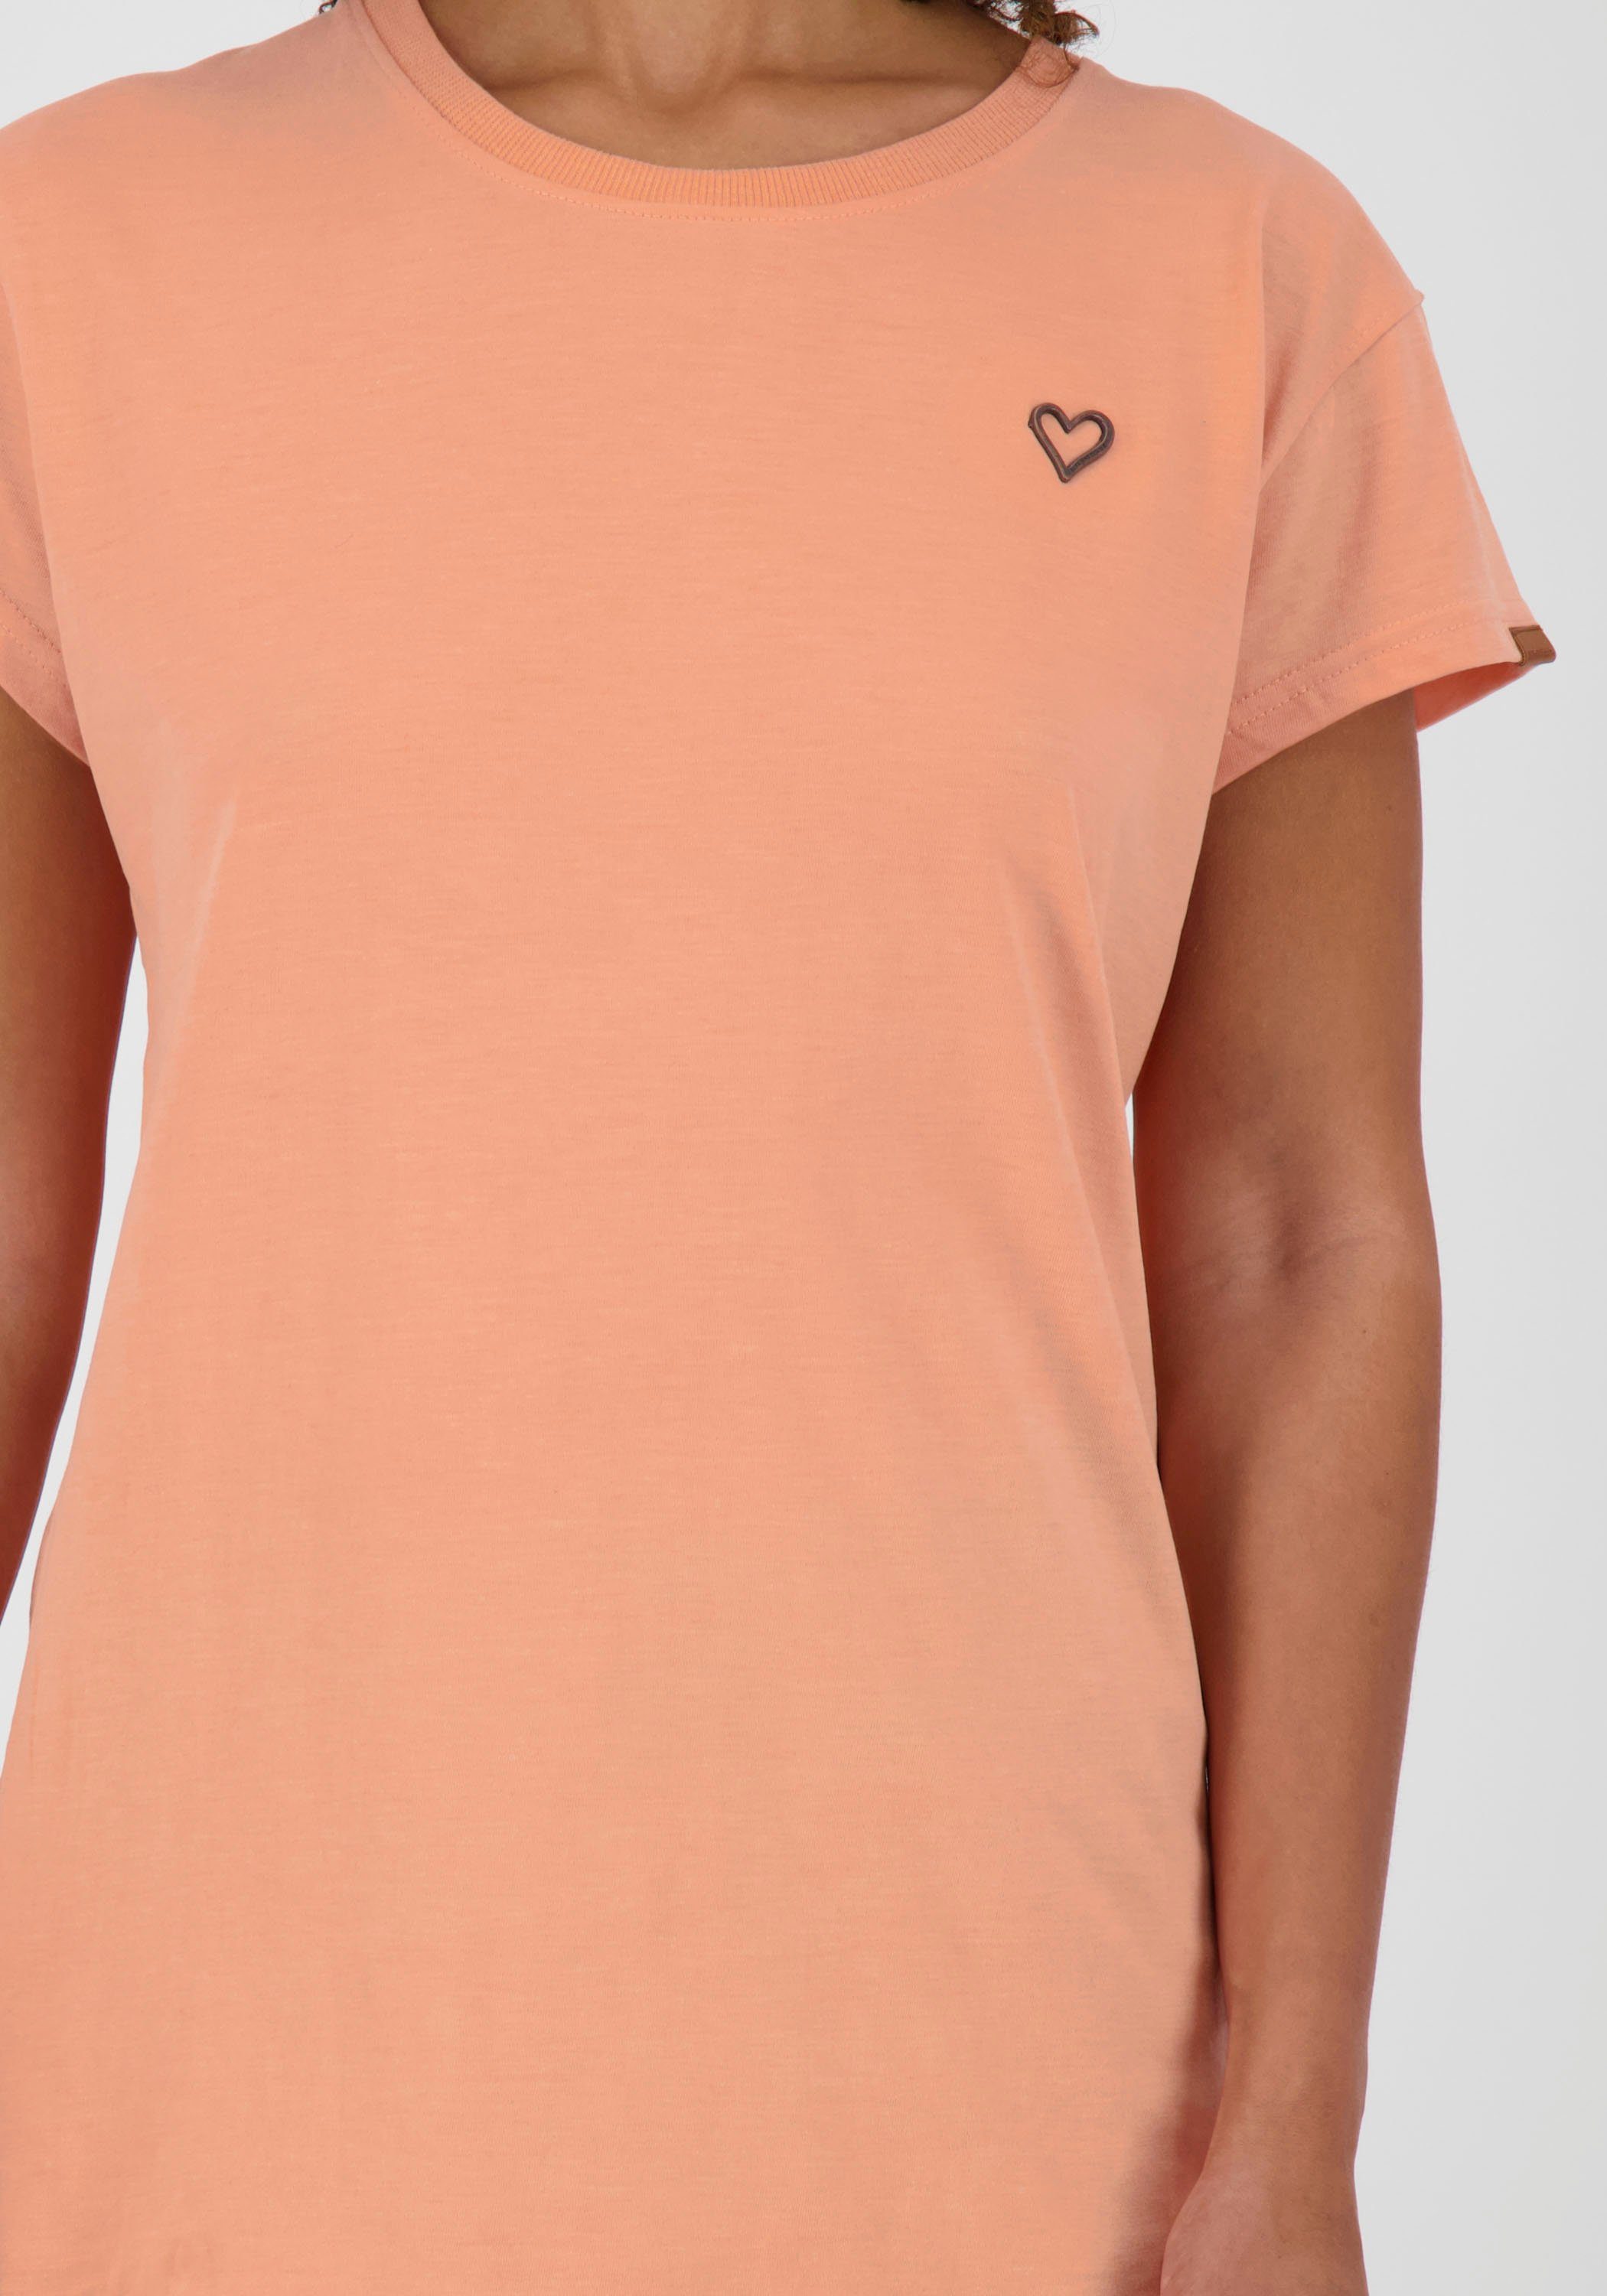 Alife & MaxiAK Kickin in peach Uni-Farben Longshirt A schönen sportives T-Shirt